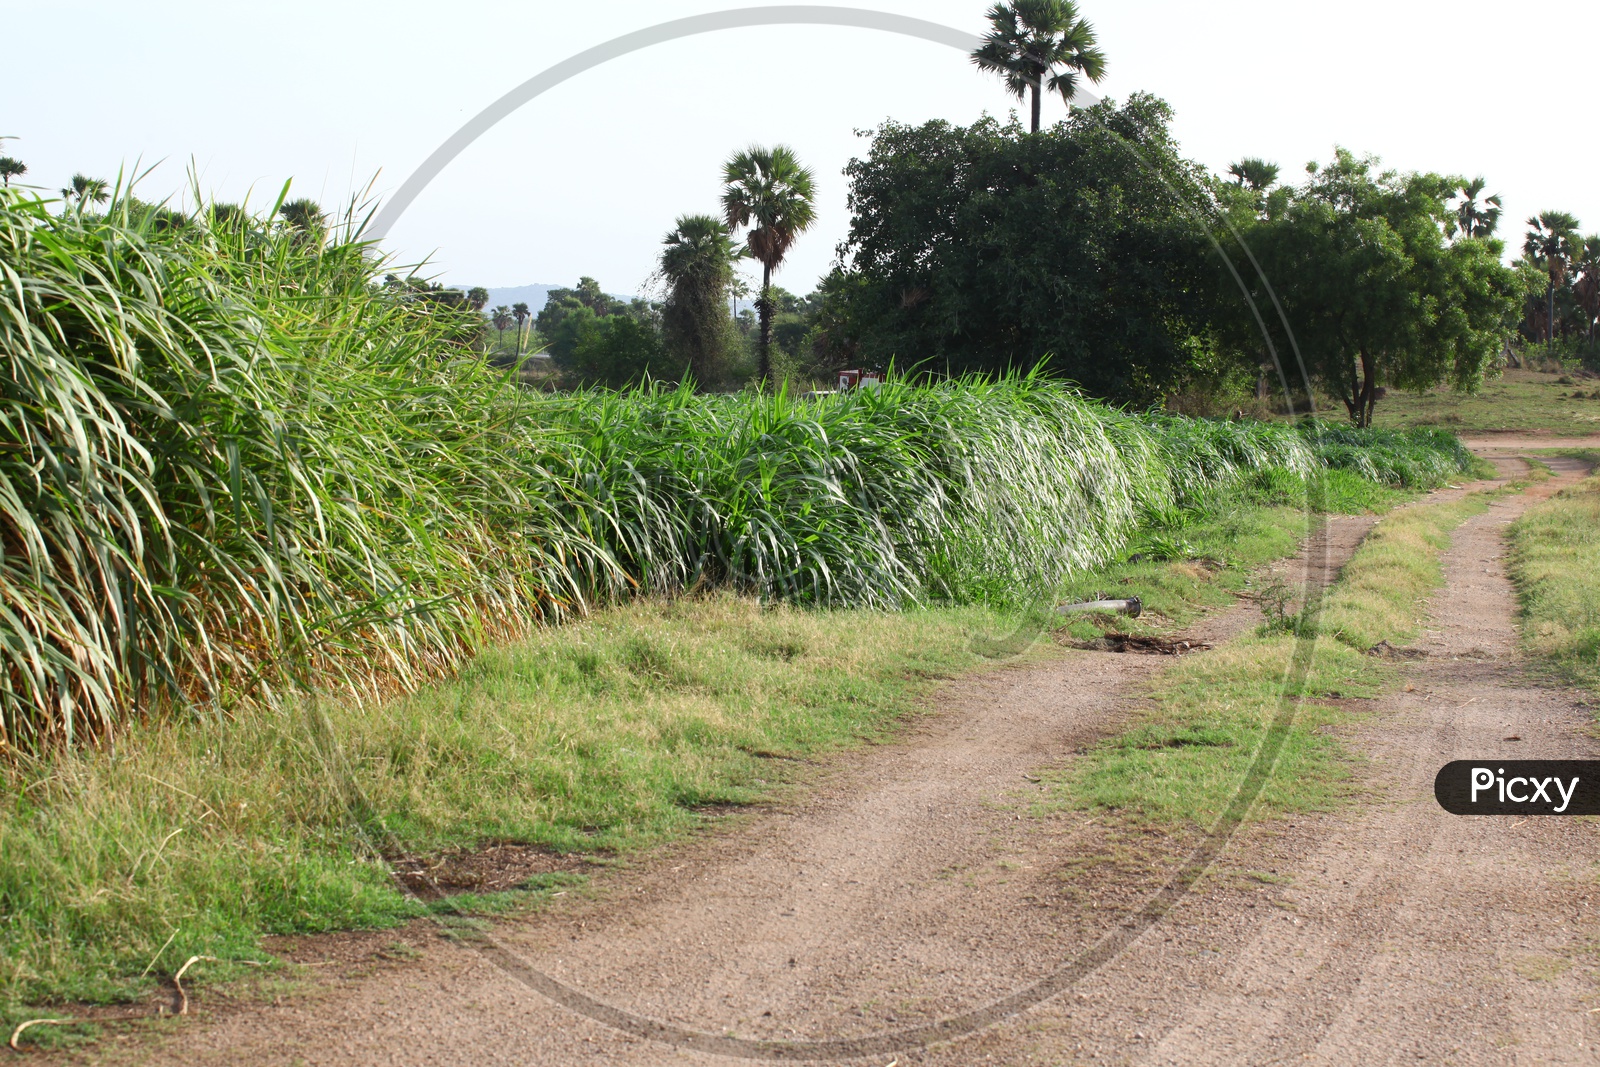 Sugar cane field